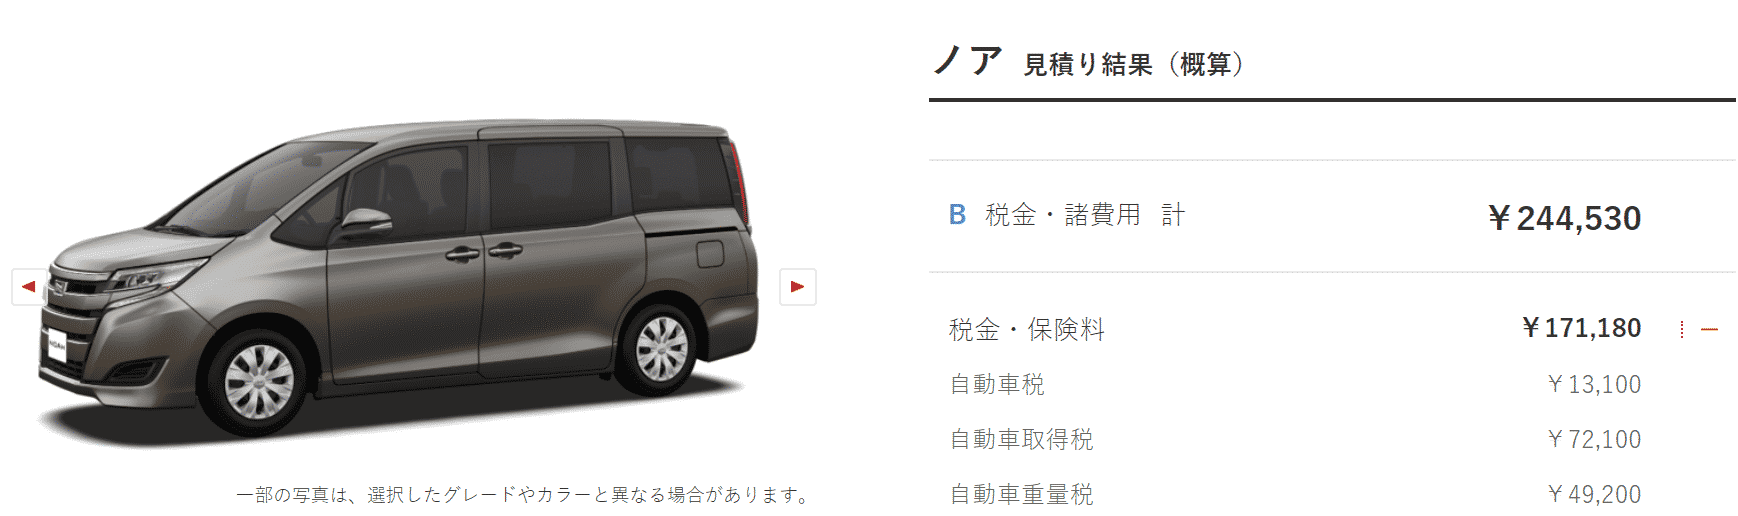 「Xi“サイドリフトアップチルトシート装着車”」の税額画像